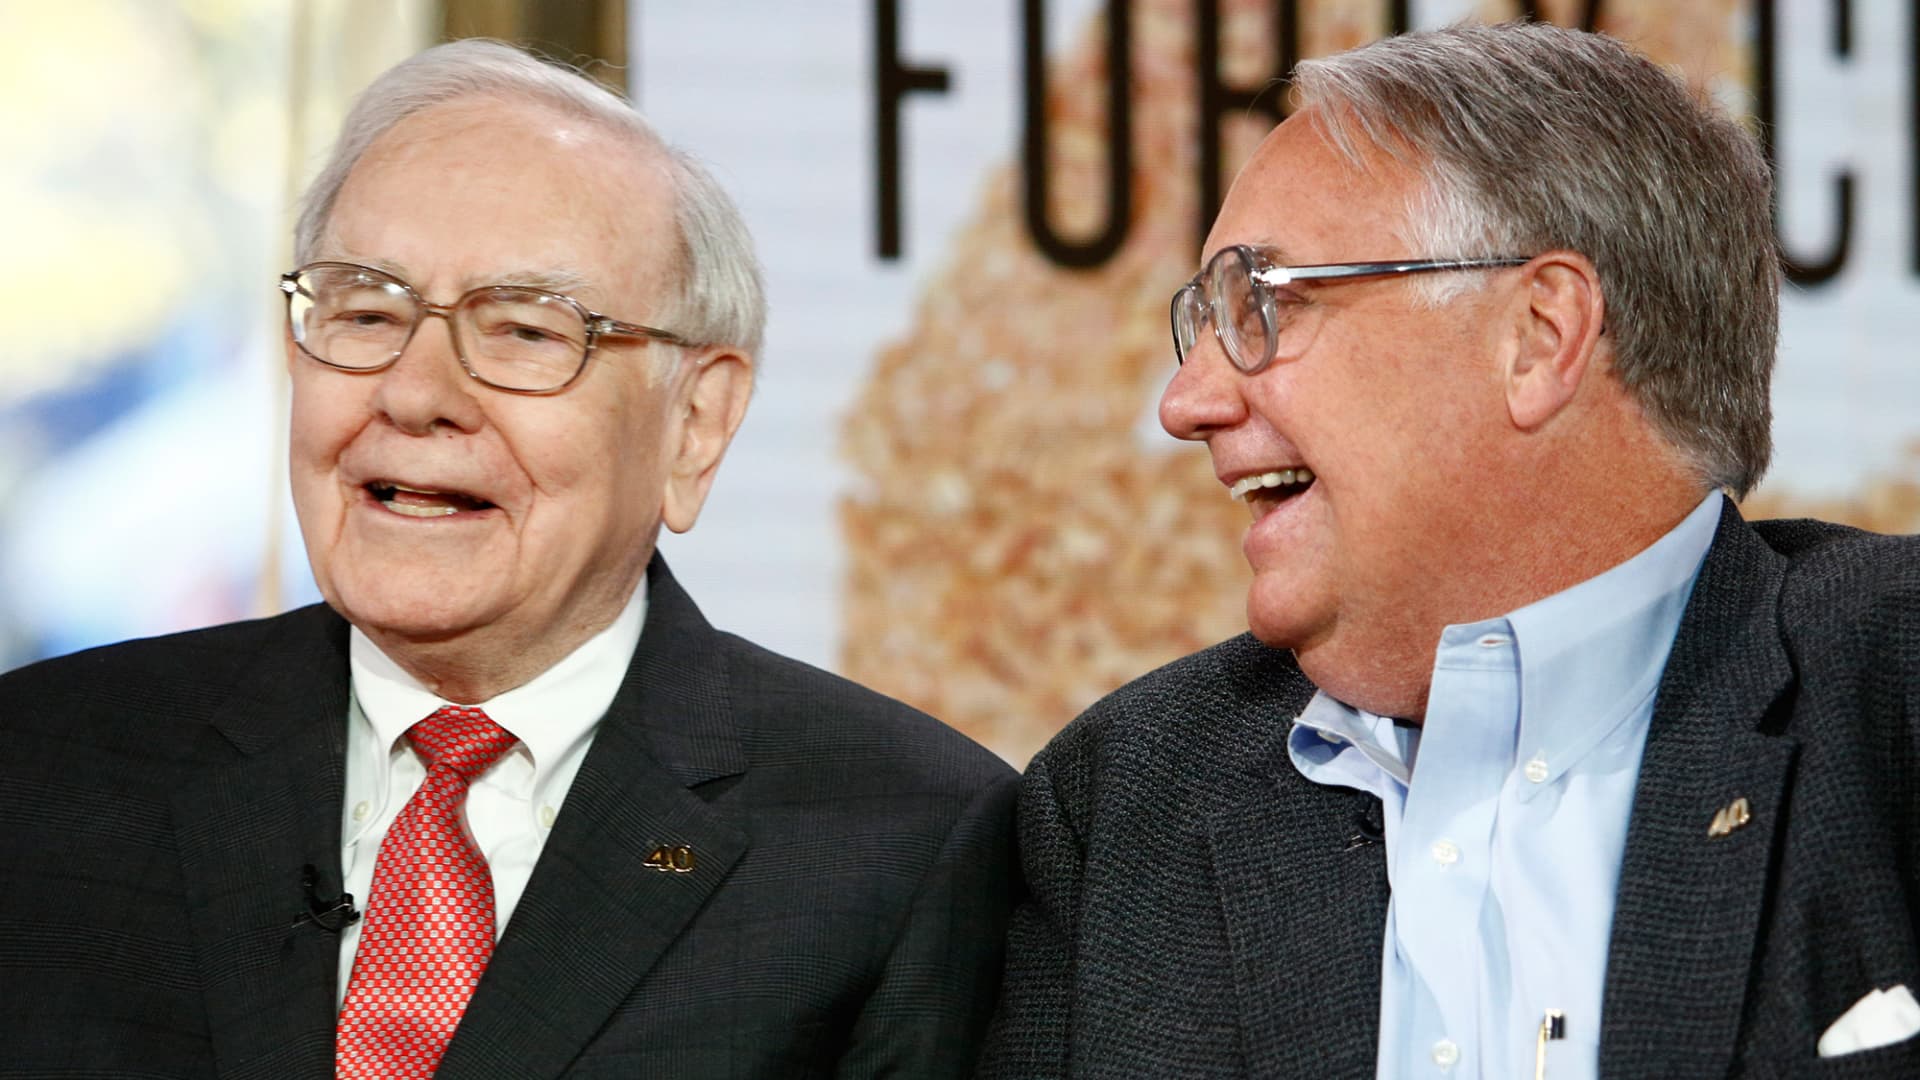 Warren Buffett’s son donates .7 million for Ukraine aid after meeting with Zelenskyy